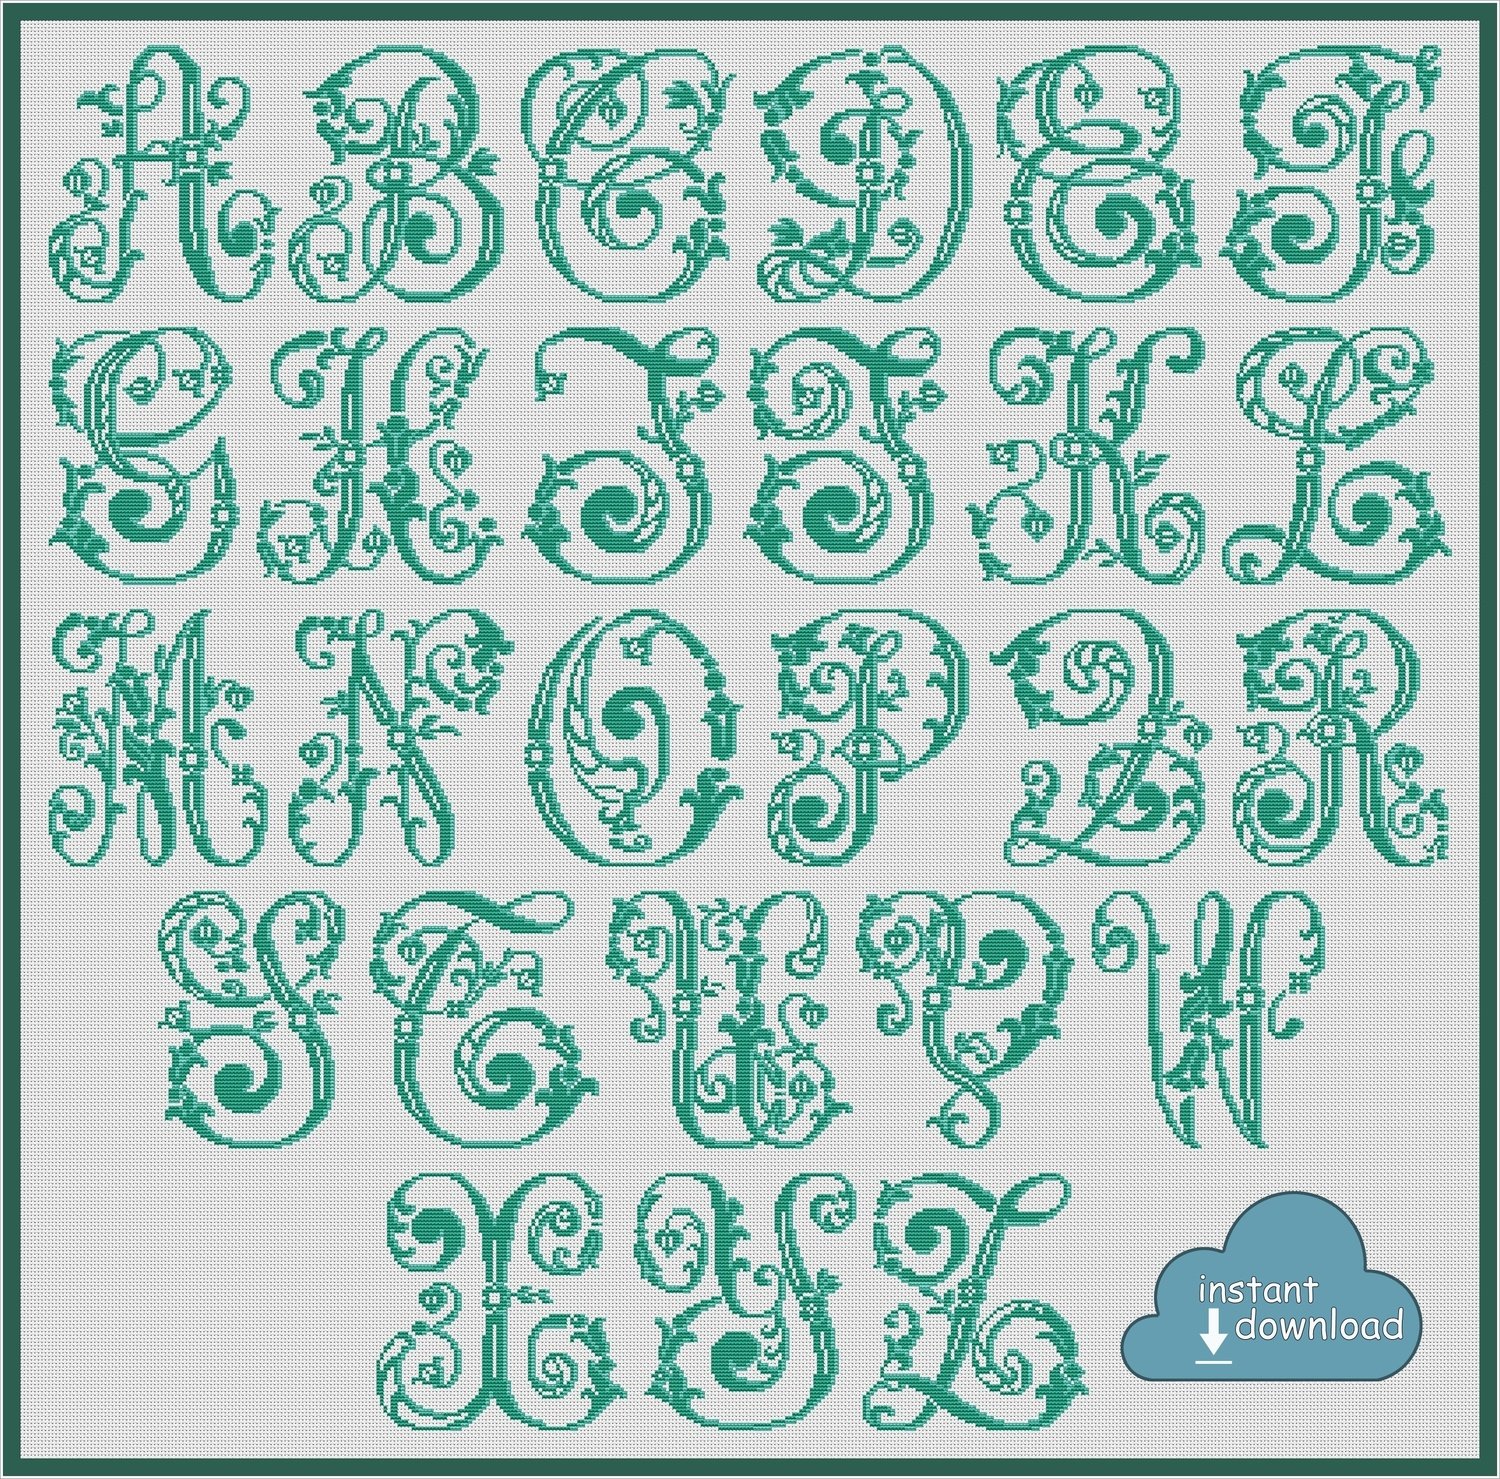 Antique Alphabet Monogram Cross Stitch Pattern PDF + XSD. Floral ABC Cross Stitch Chart PDF. Instant Download